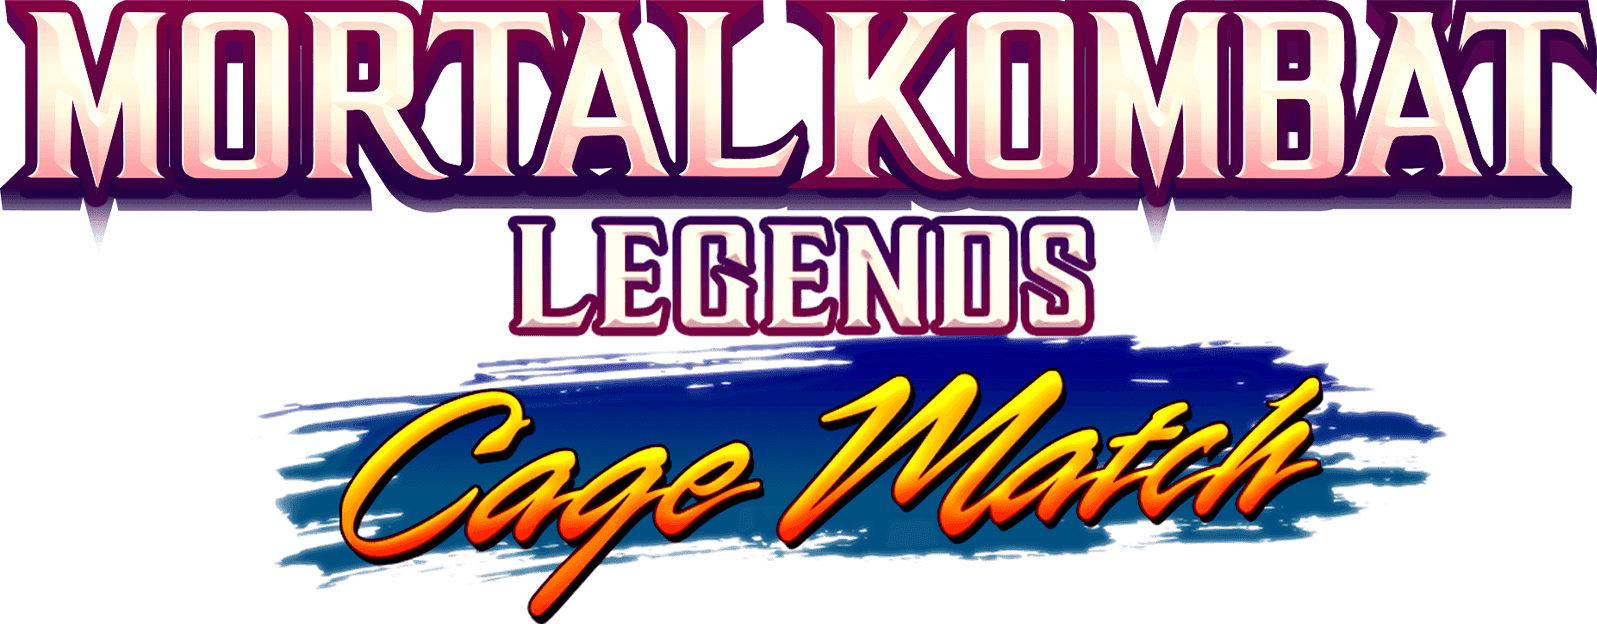 Mortal Kombat Legends: Cage Match logo